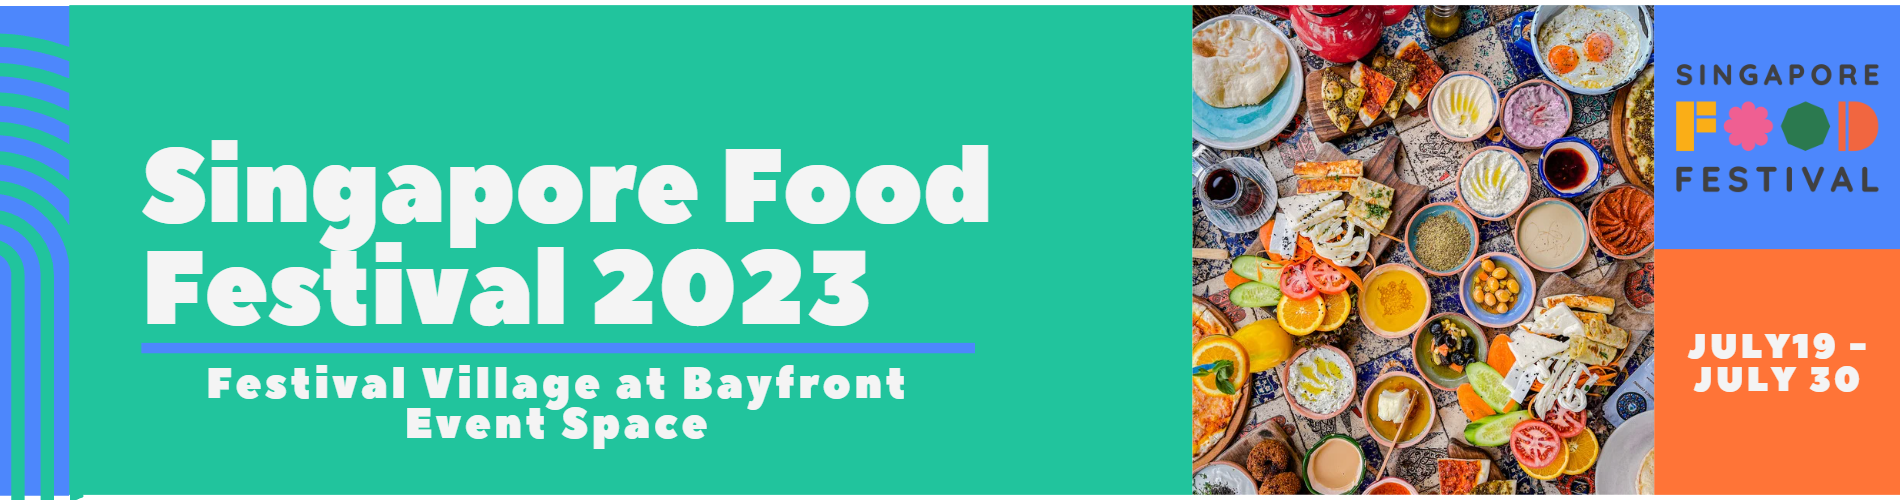 Singapore Food Festival 2023